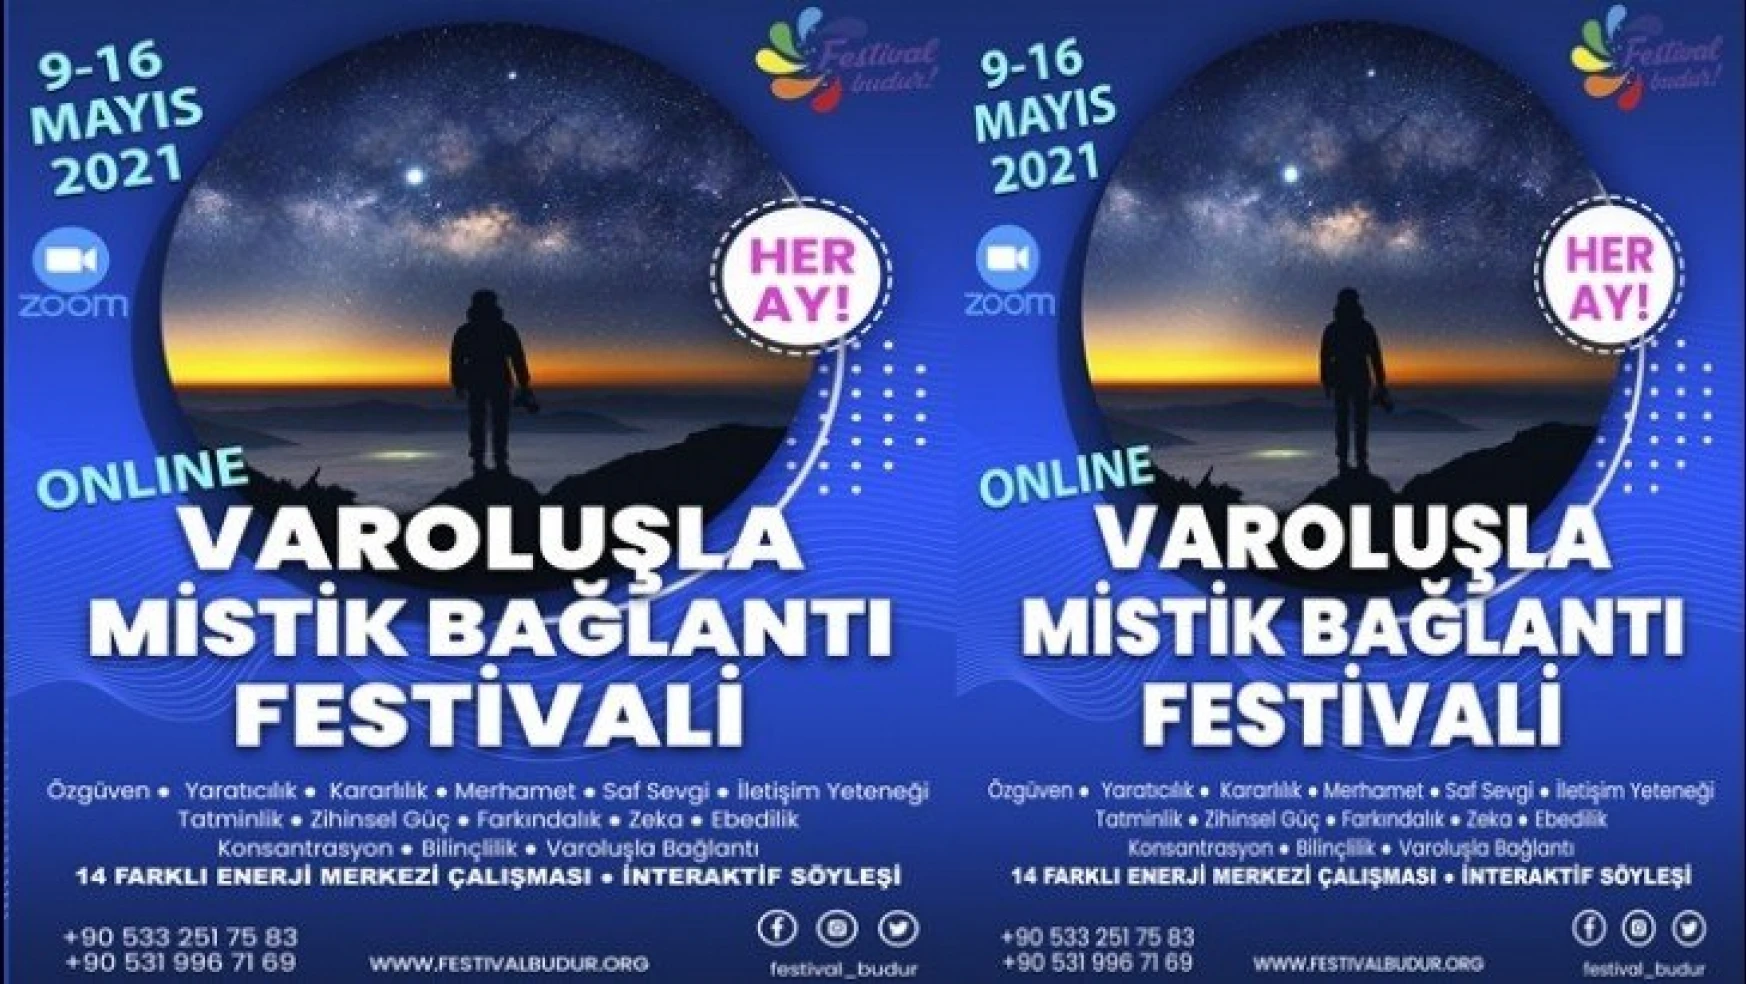 Covıd-19'a Karşı Varoluşla Mistik Bağlantı Festivali